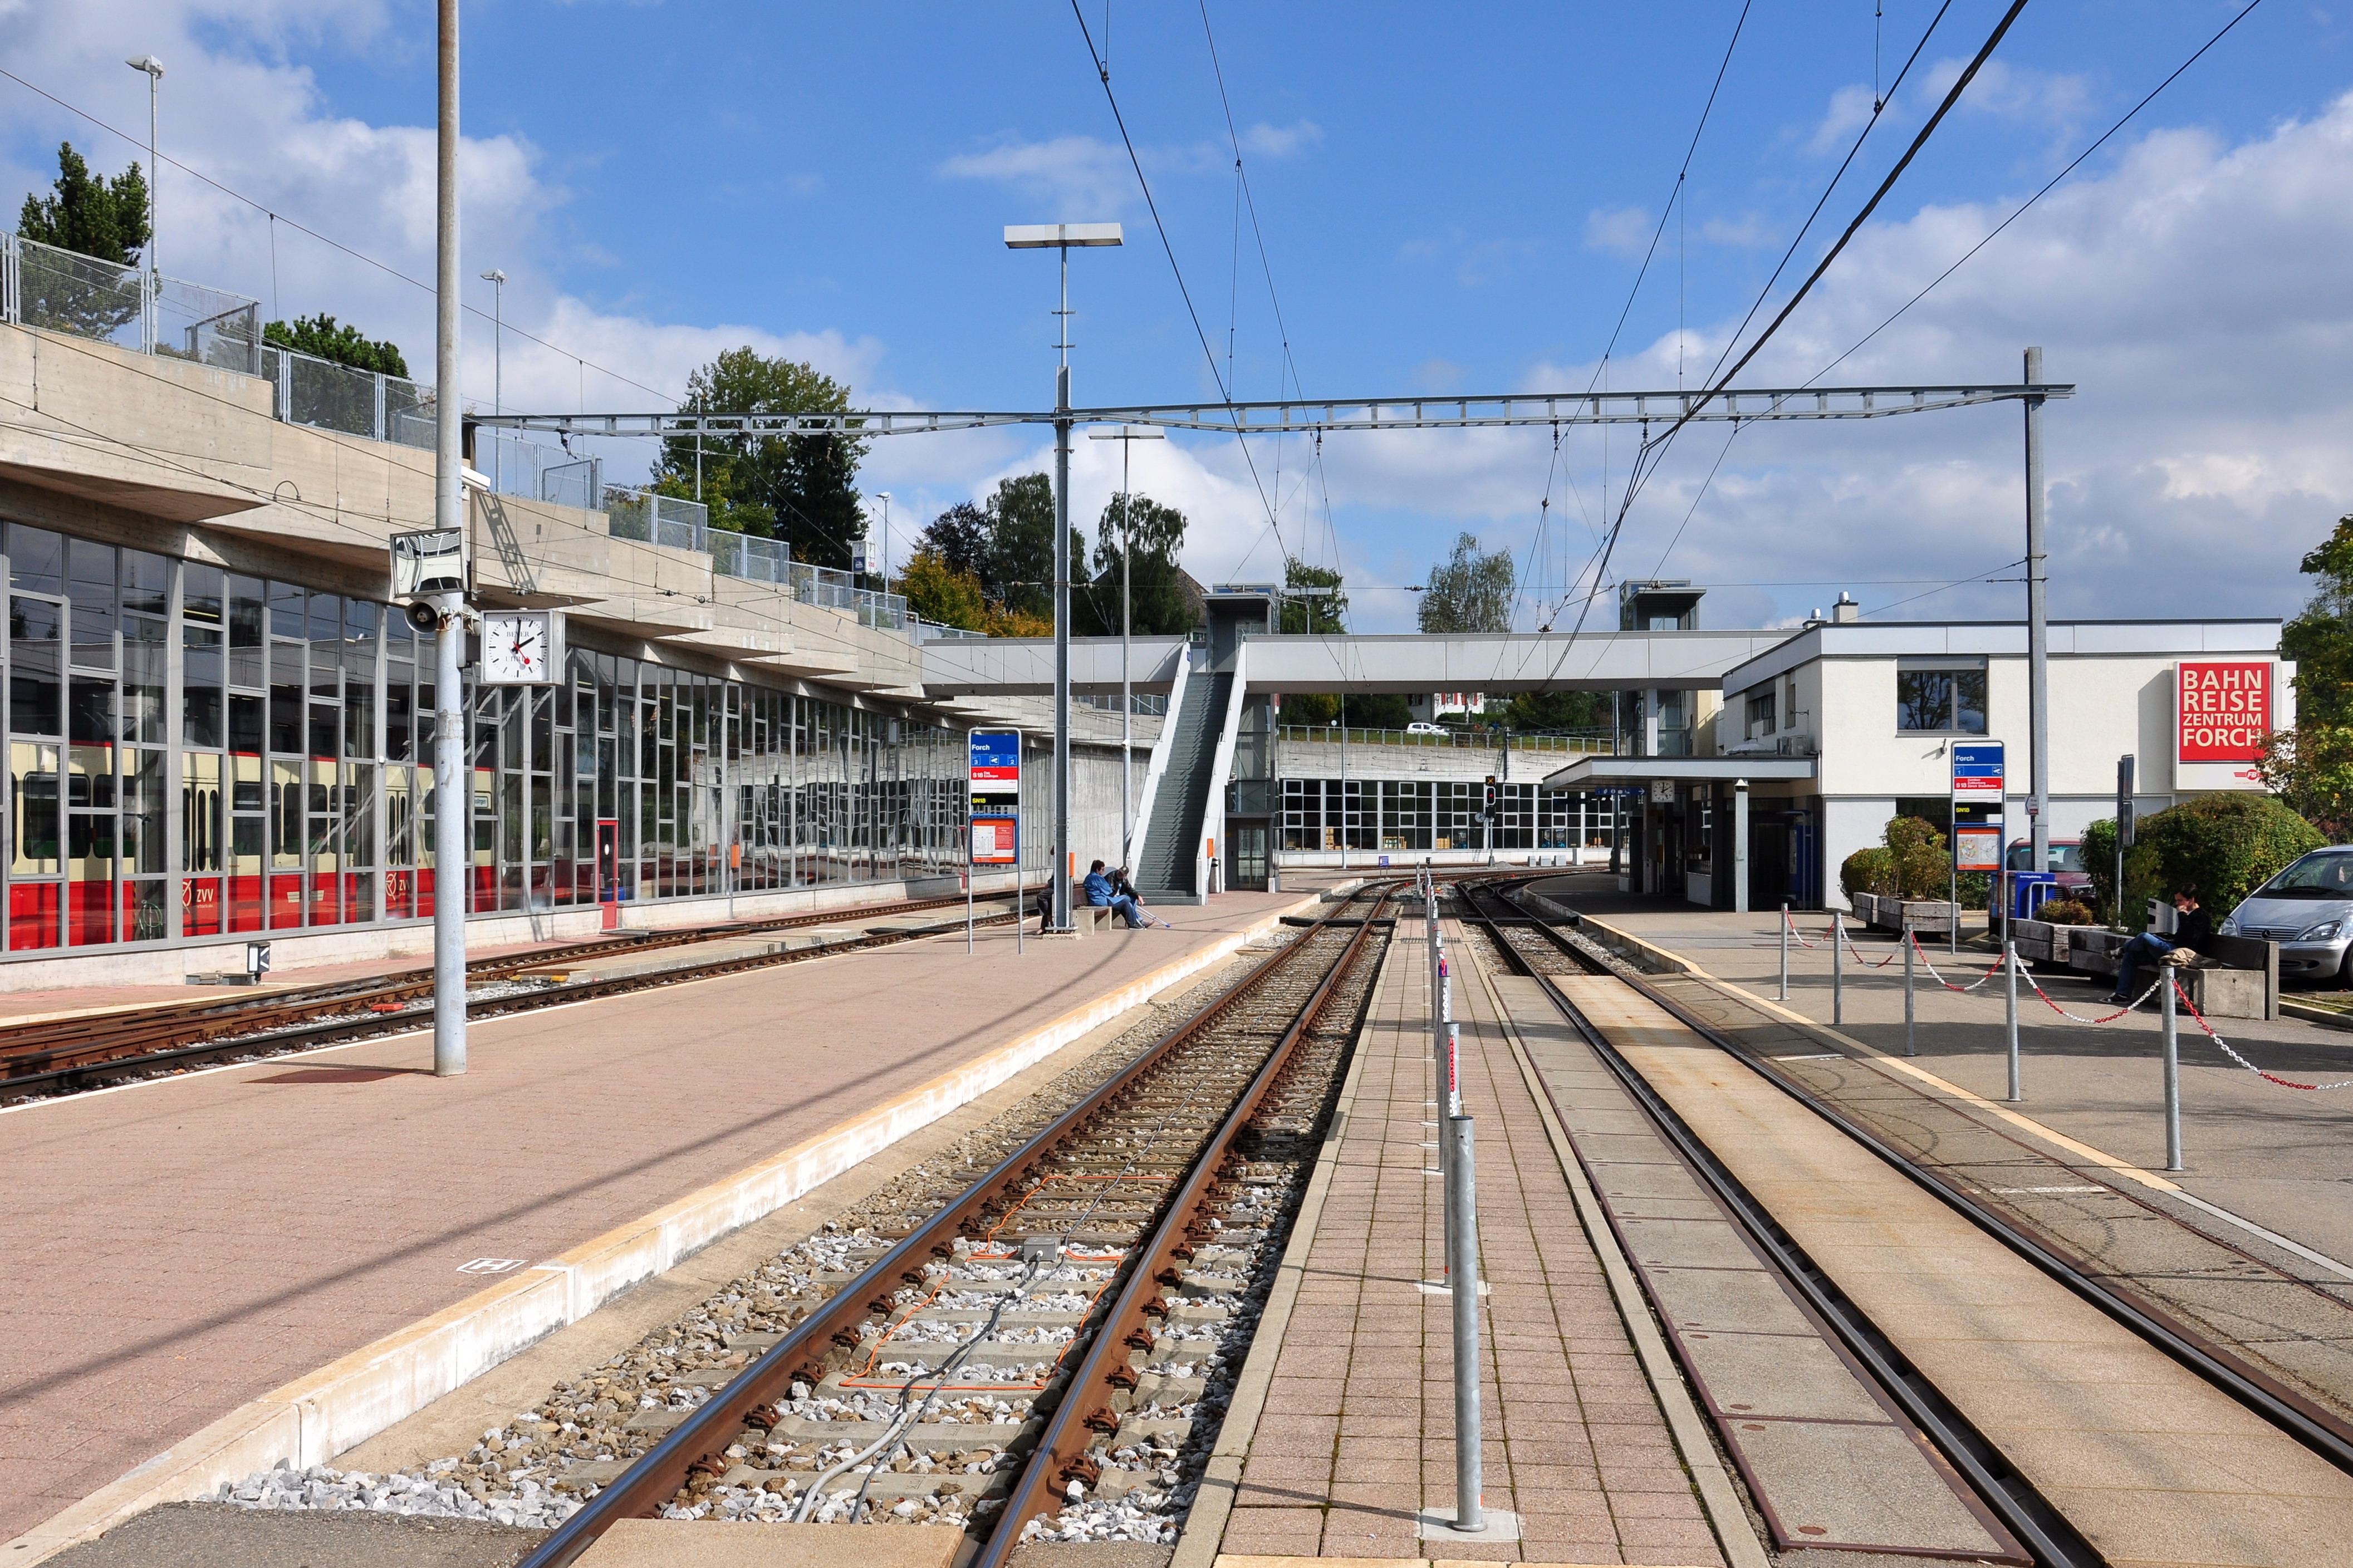 Forch railway station - Wikipedia